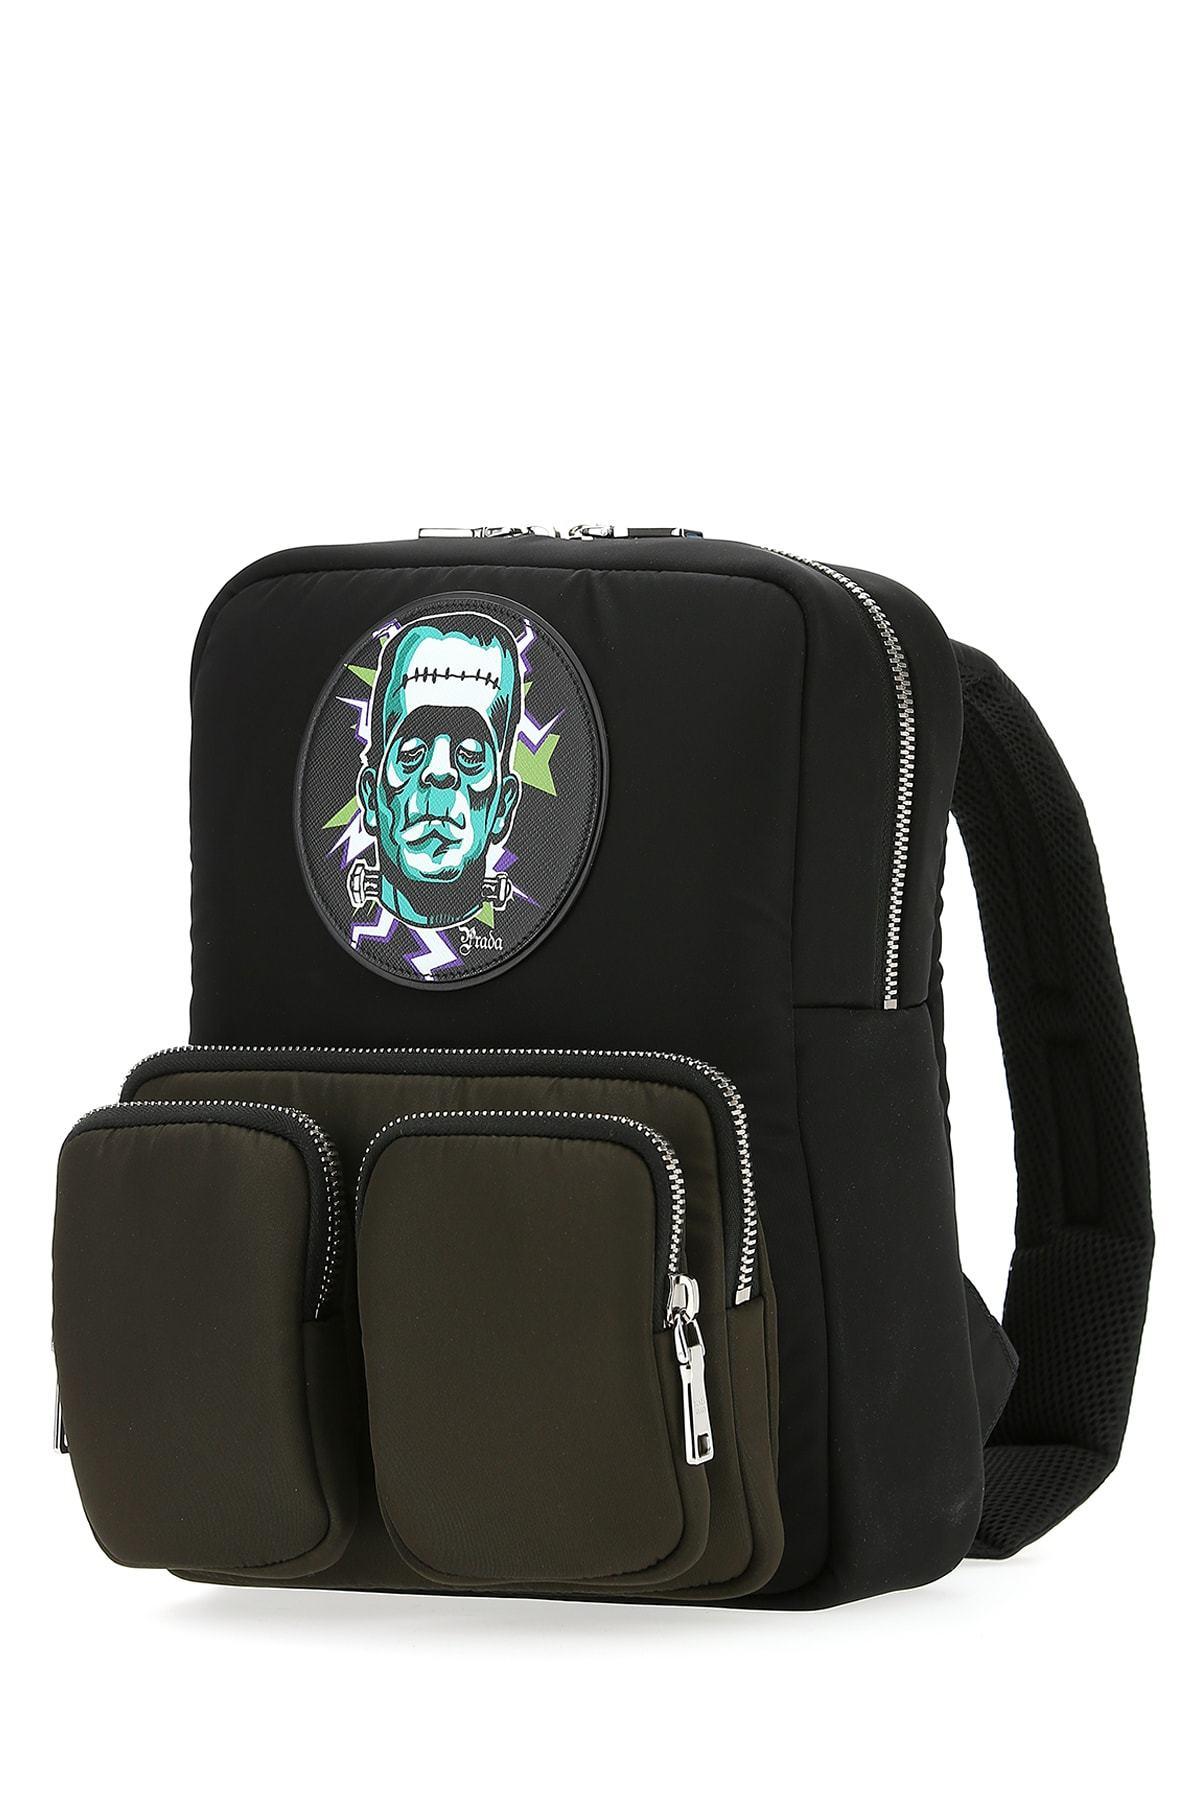 Prada Synthetic Frankenstein Print Backpack in Black for Men - Save 82% -  Lyst